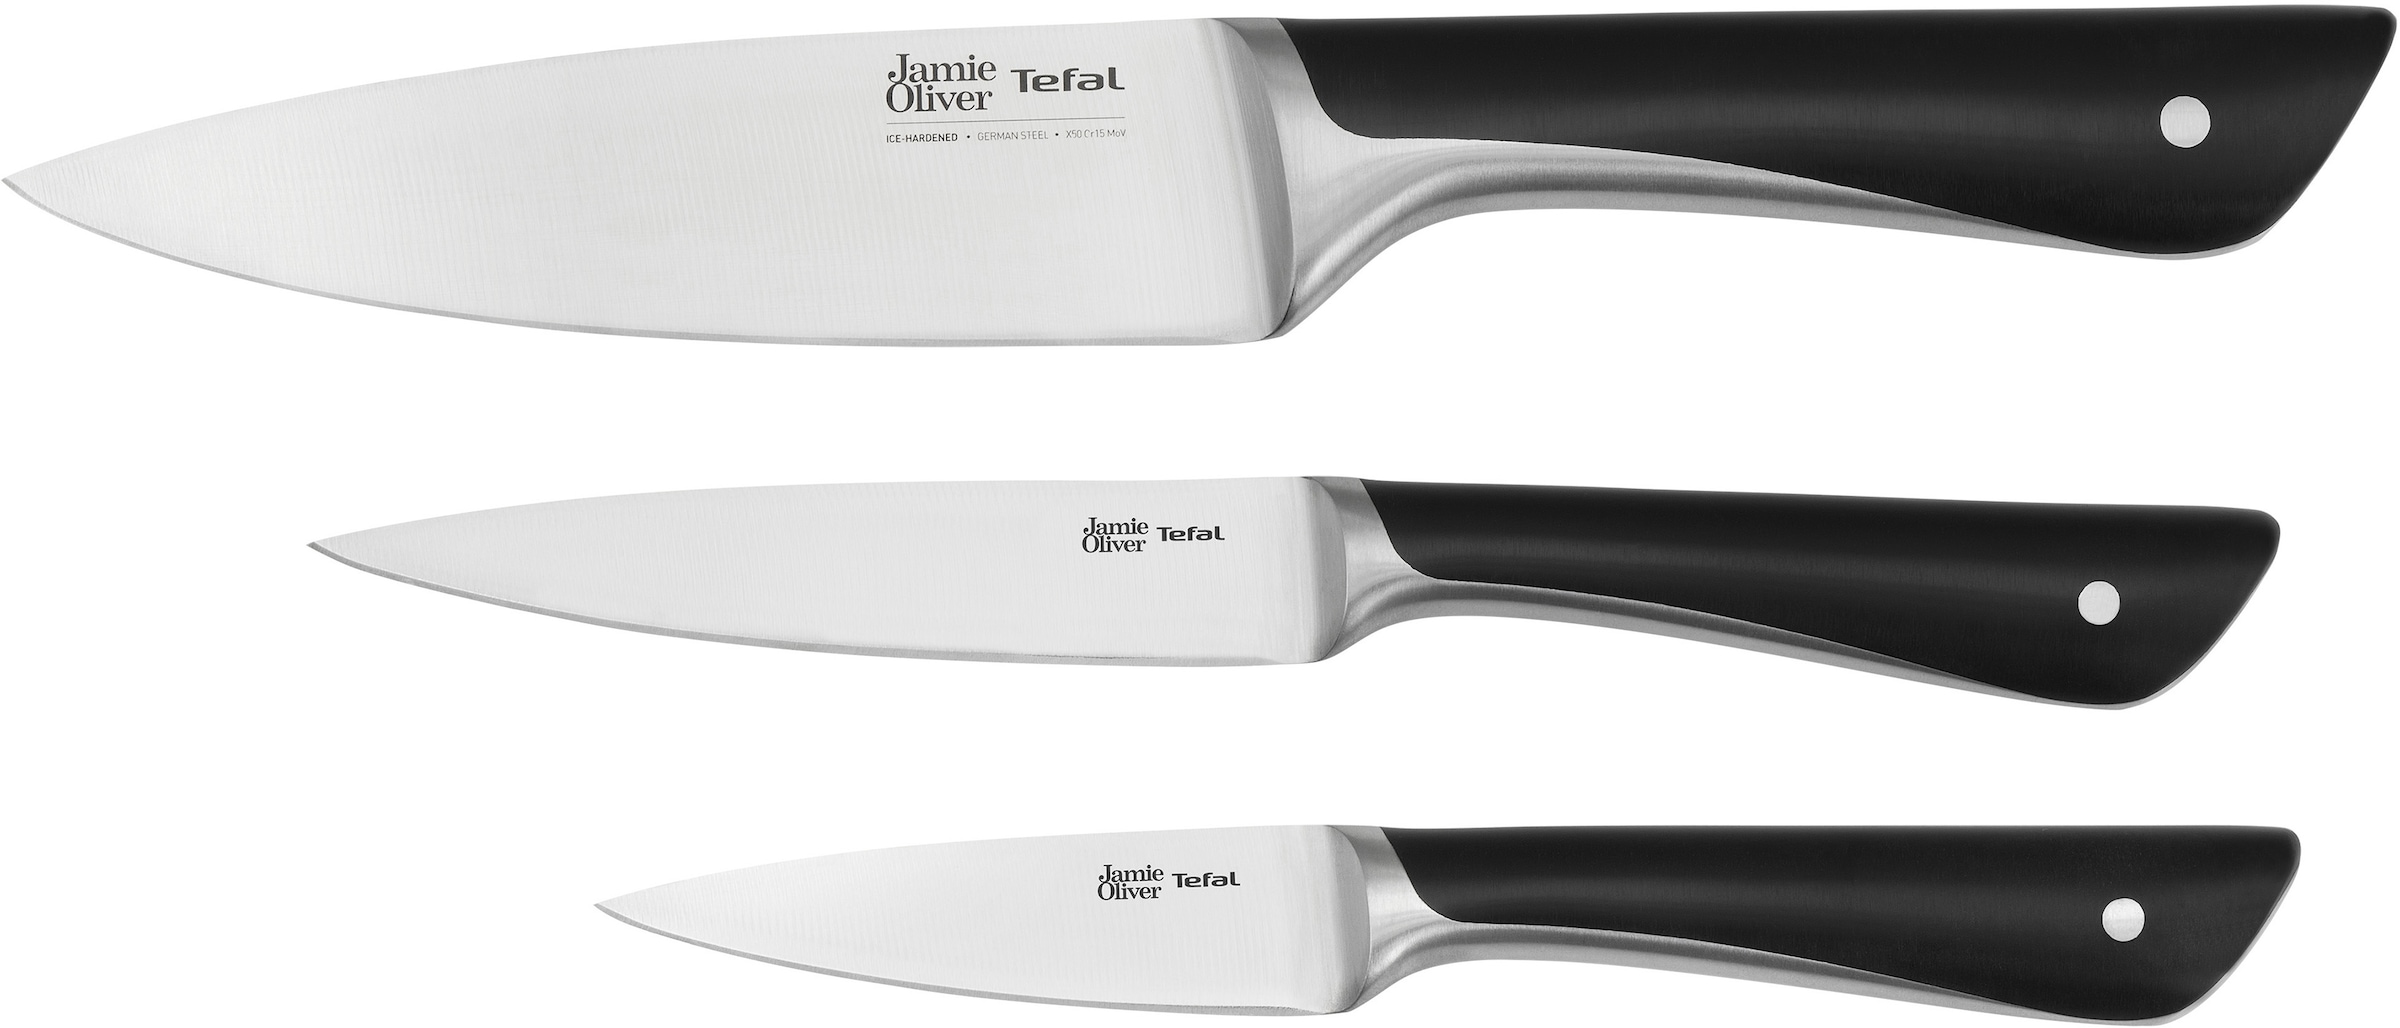 Tefal Messer-Set »K267S3 Jamie Oliver«, (Set, 3 tlg.), hohe Leistung, unverwechselbares Design, widerstandsfähig/langlebig